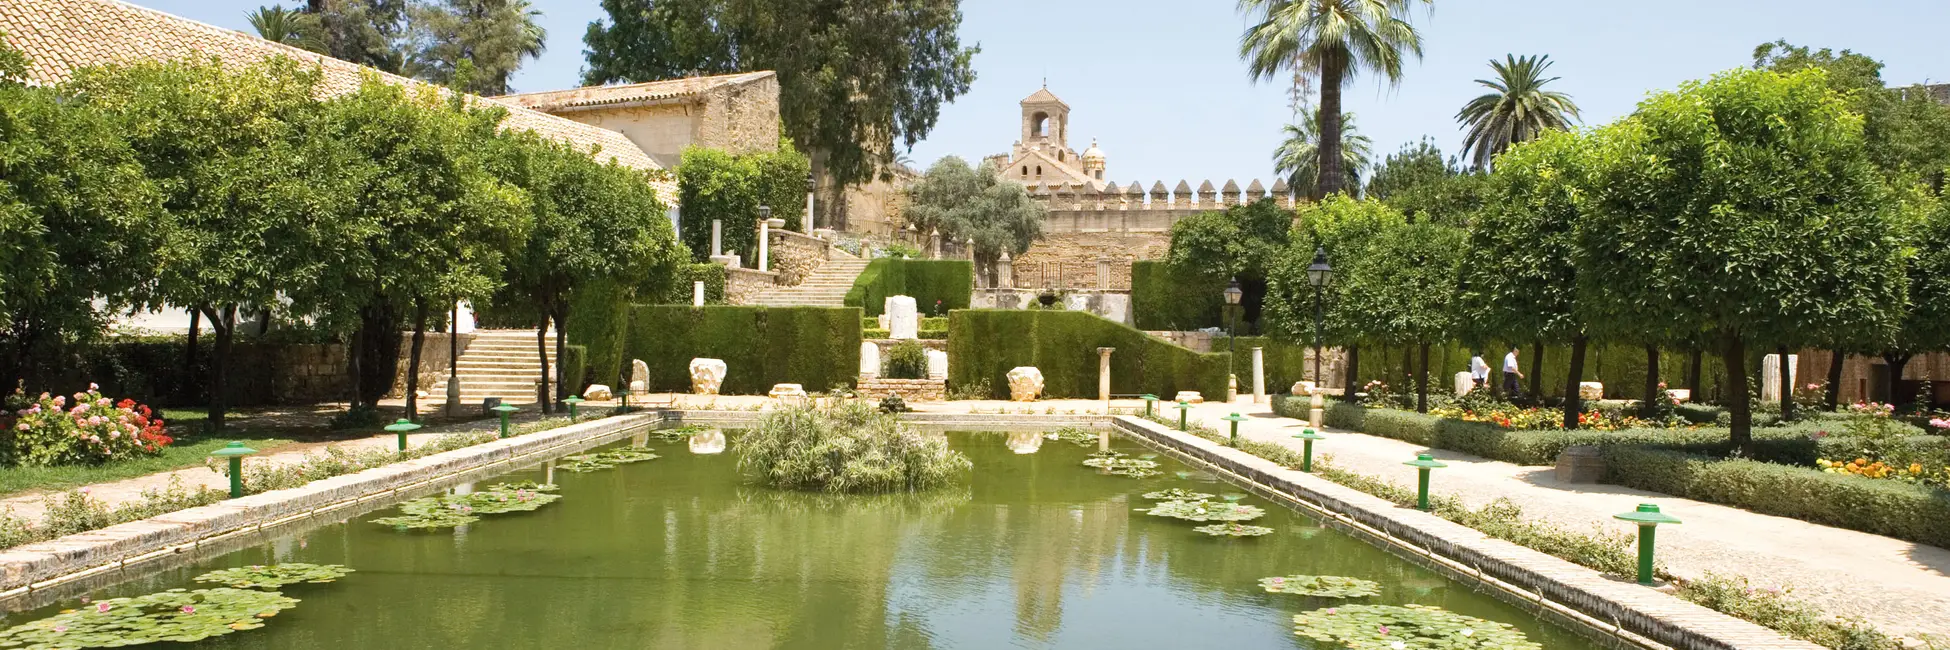 Jardin de Cordoue en Espagne